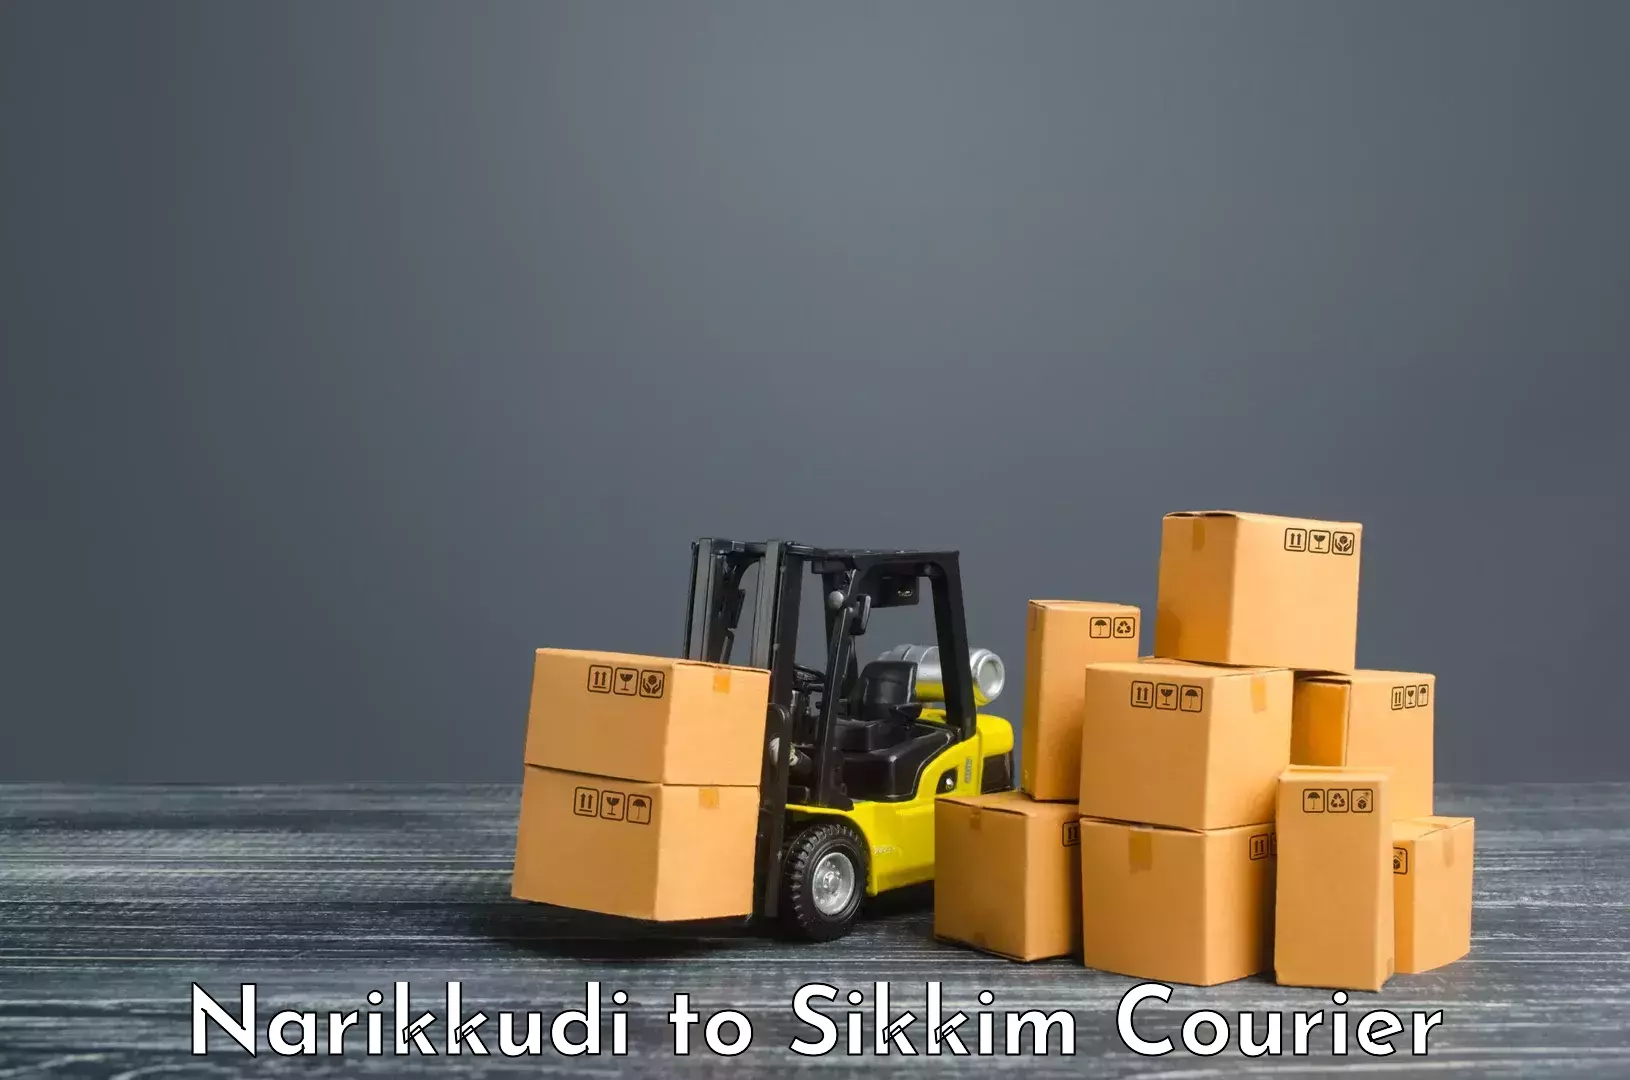 International courier networks Narikkudi to North Sikkim